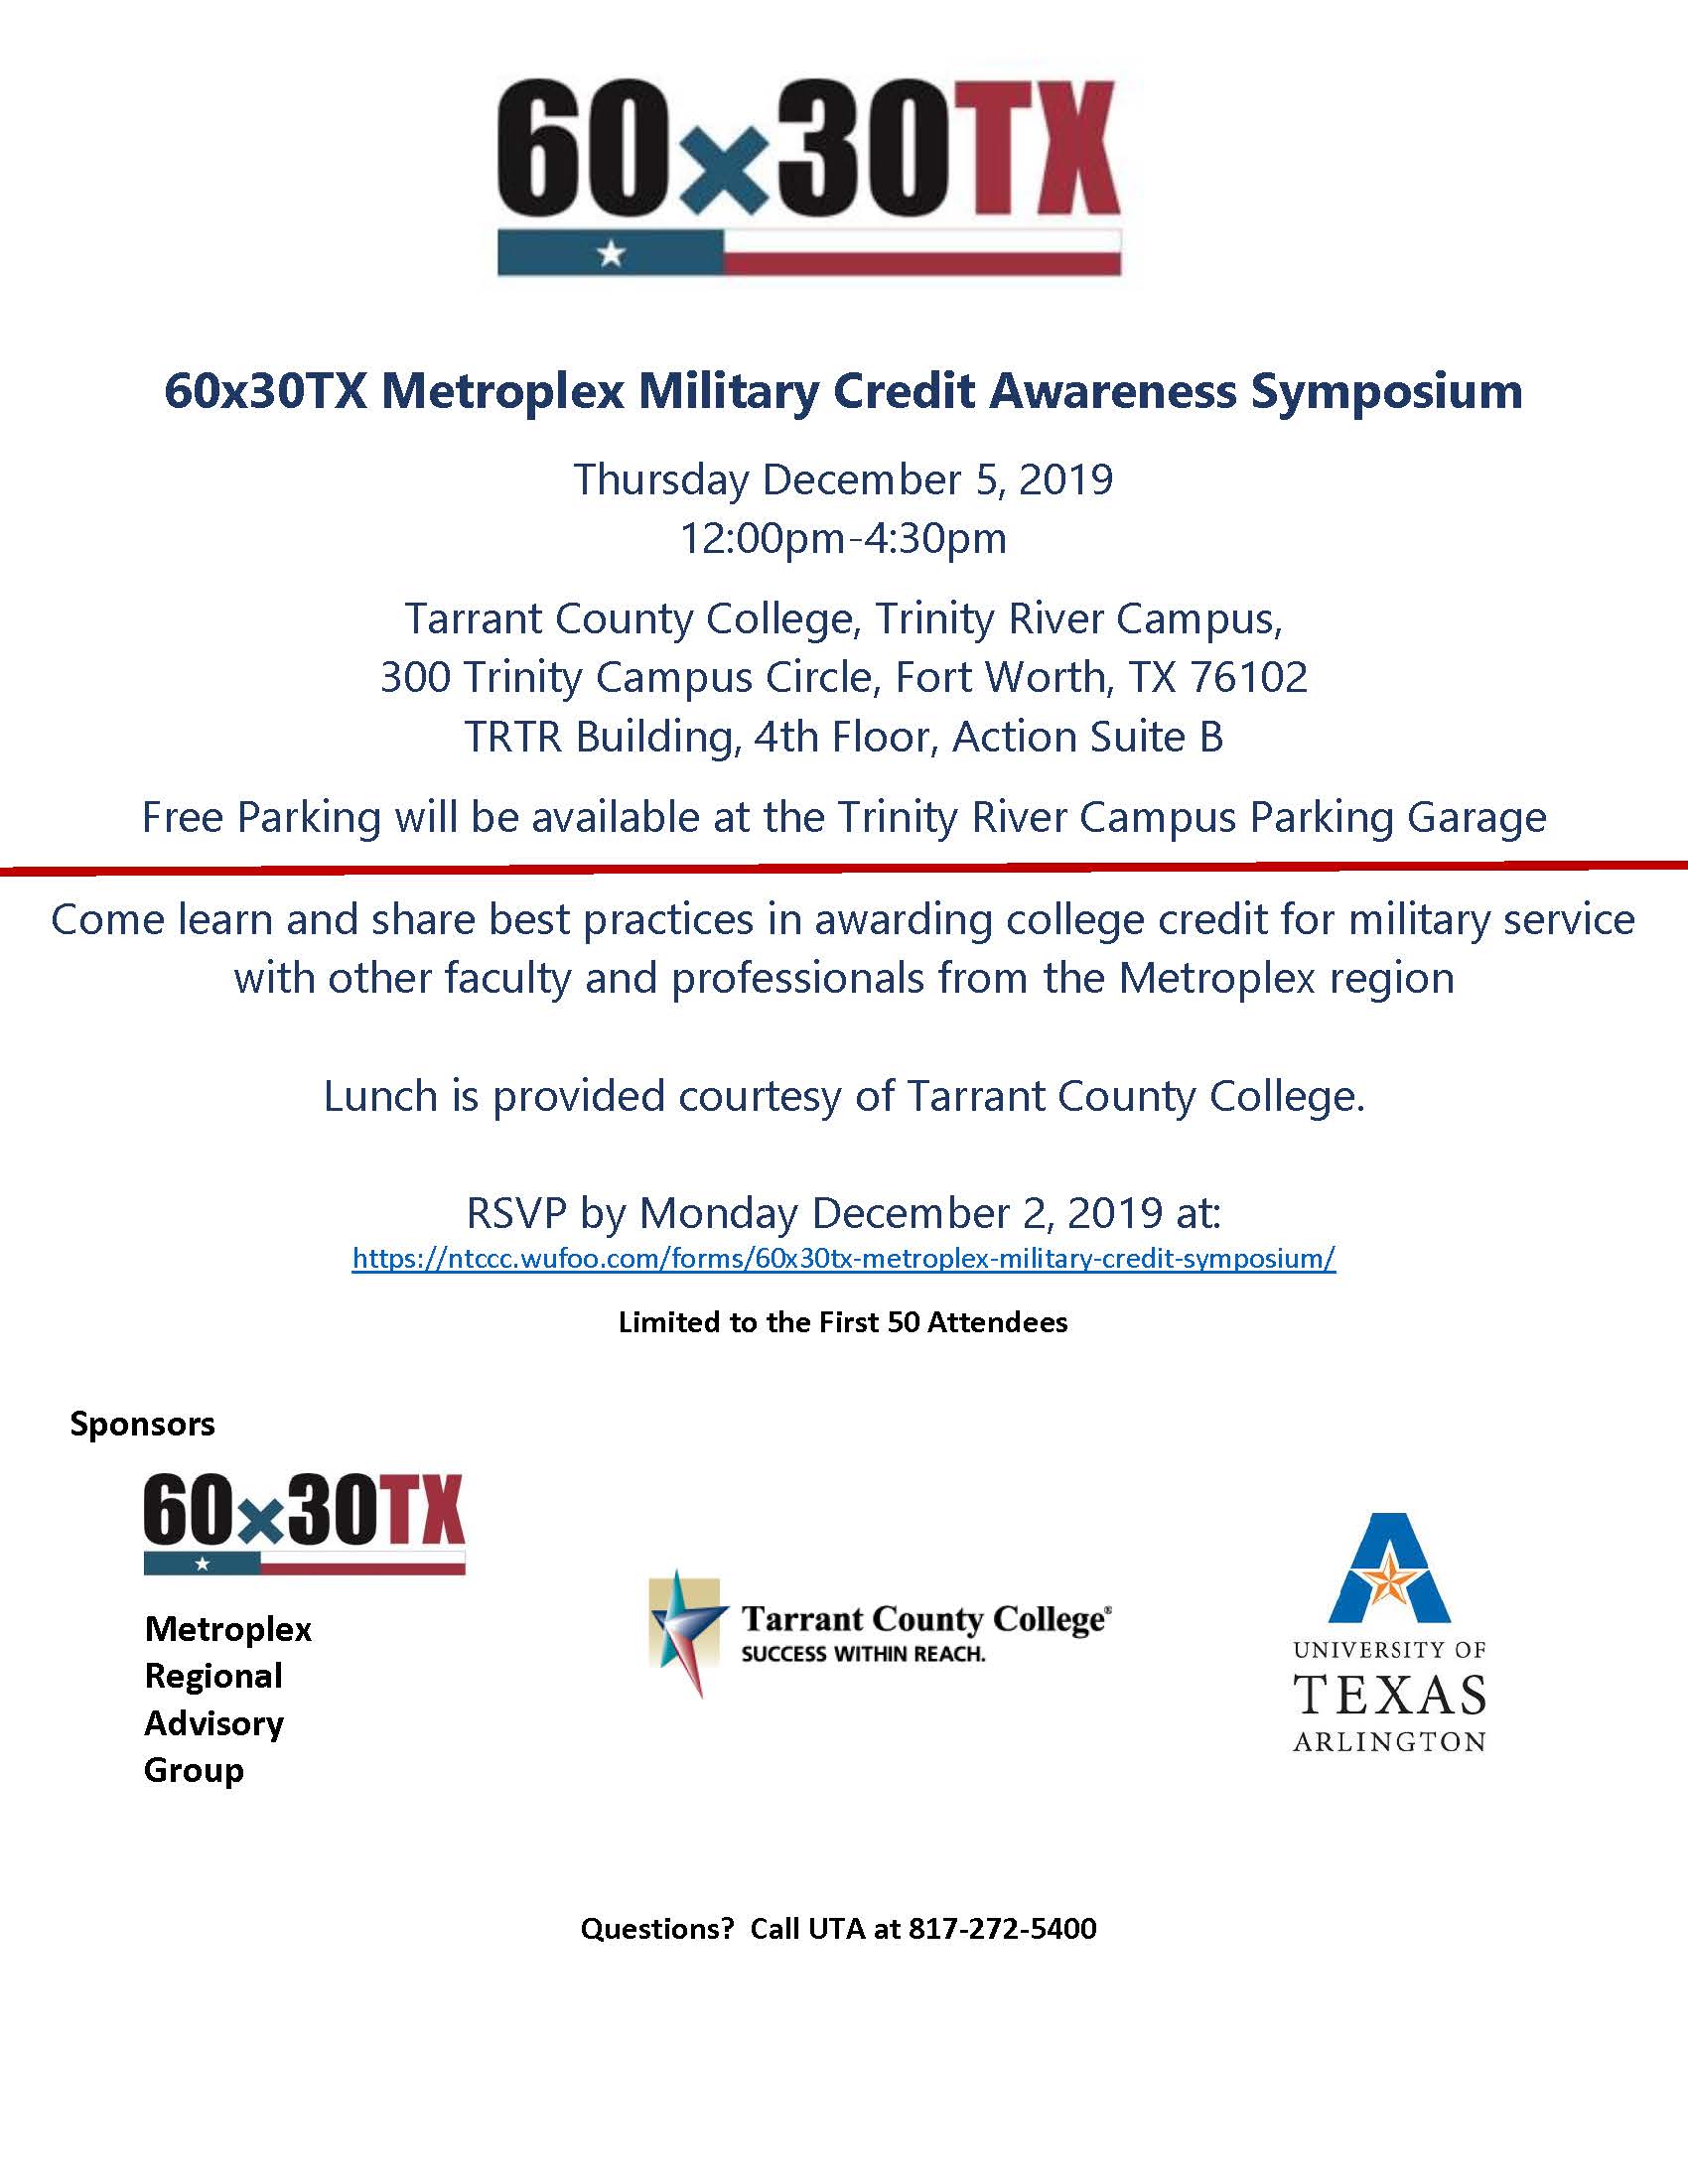 Military Credit Awareness Symposium Invite